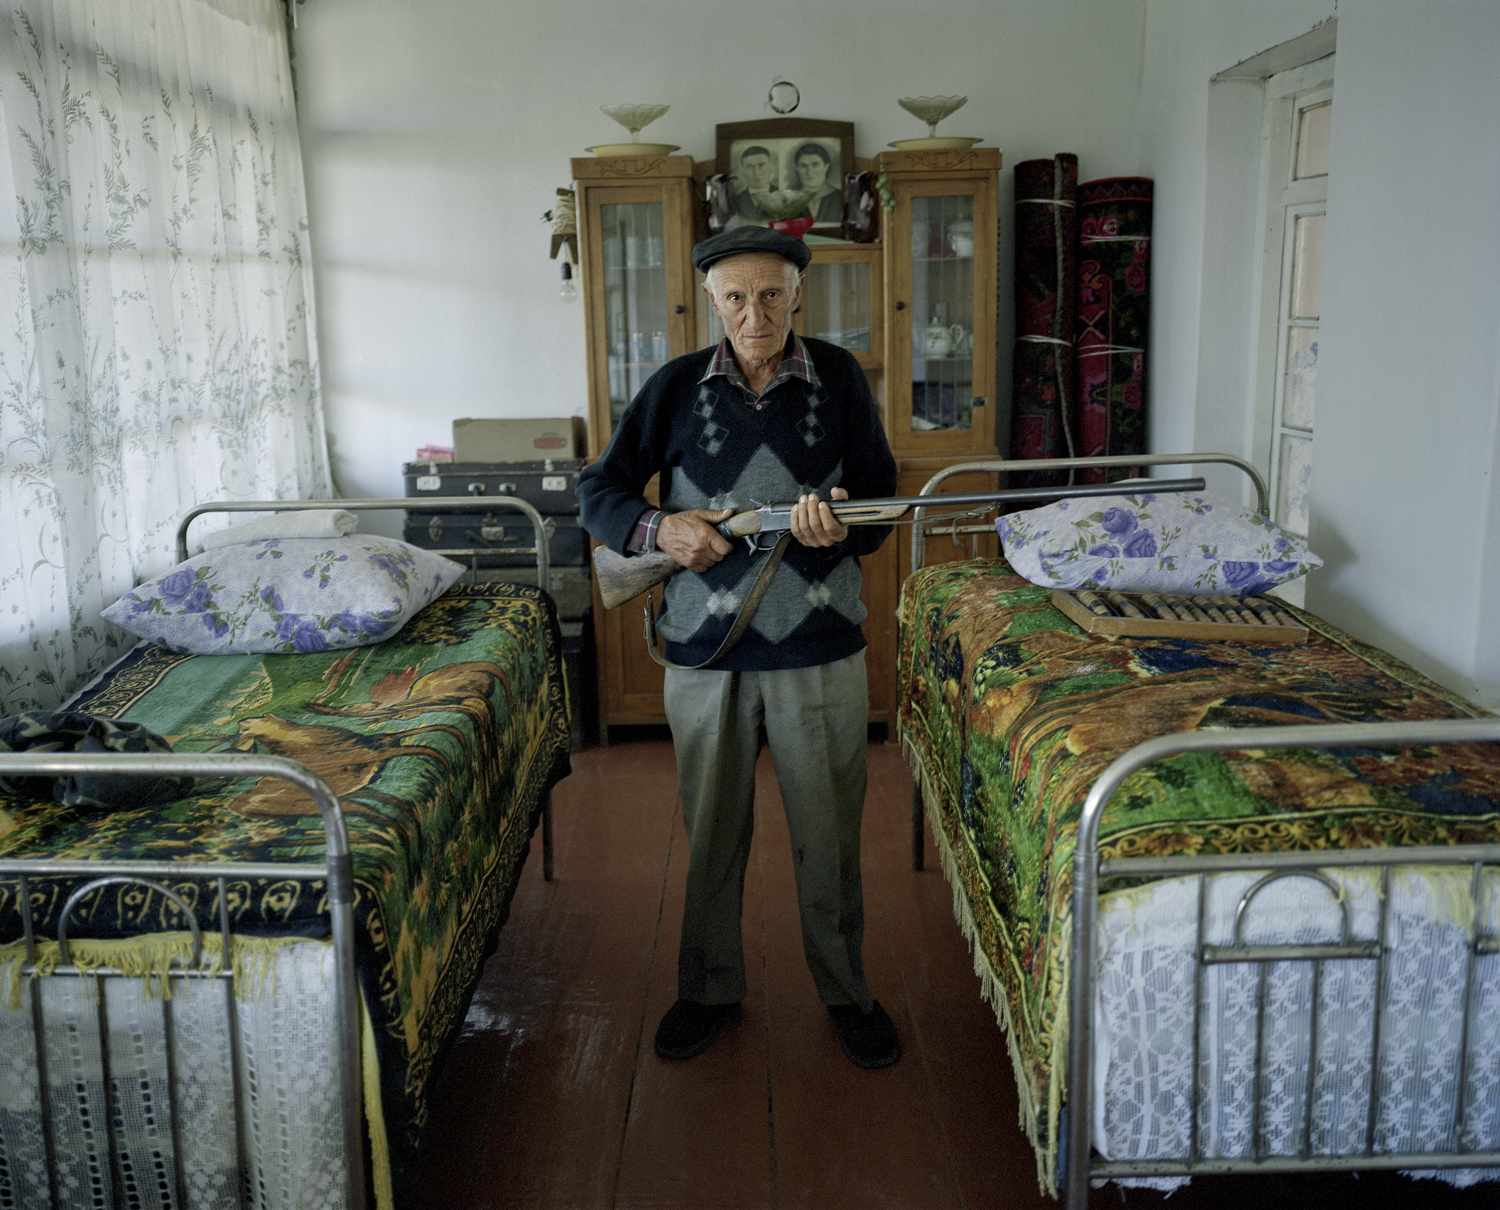 Old man, Aghasyan Aharon, village Kolatak. Guns are still a natural part of many households.